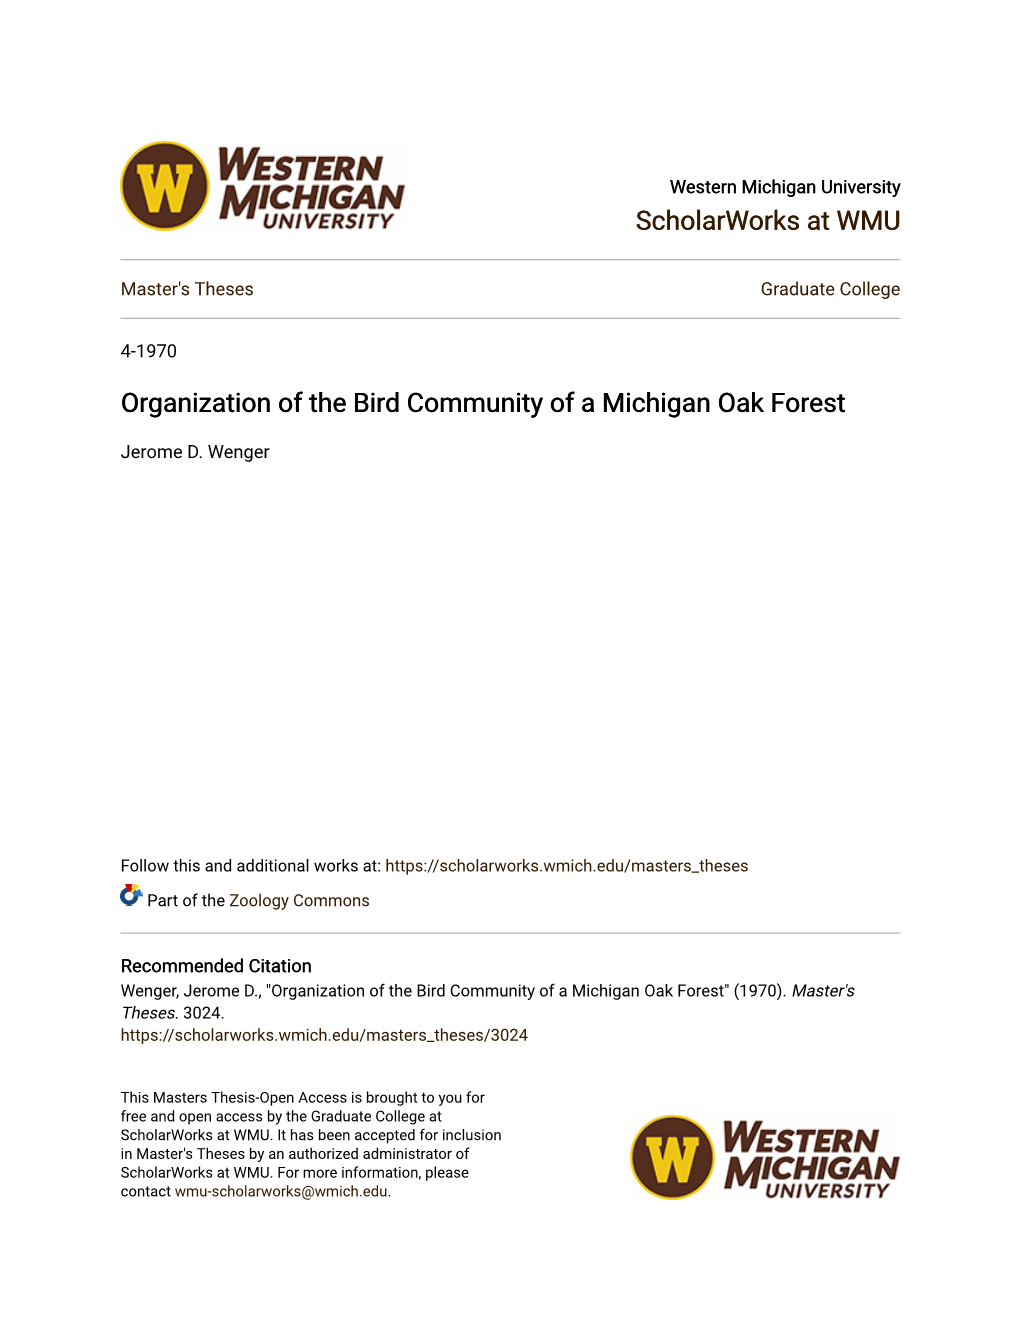 Organization of the Bird Community of a Michigan Oak Forest